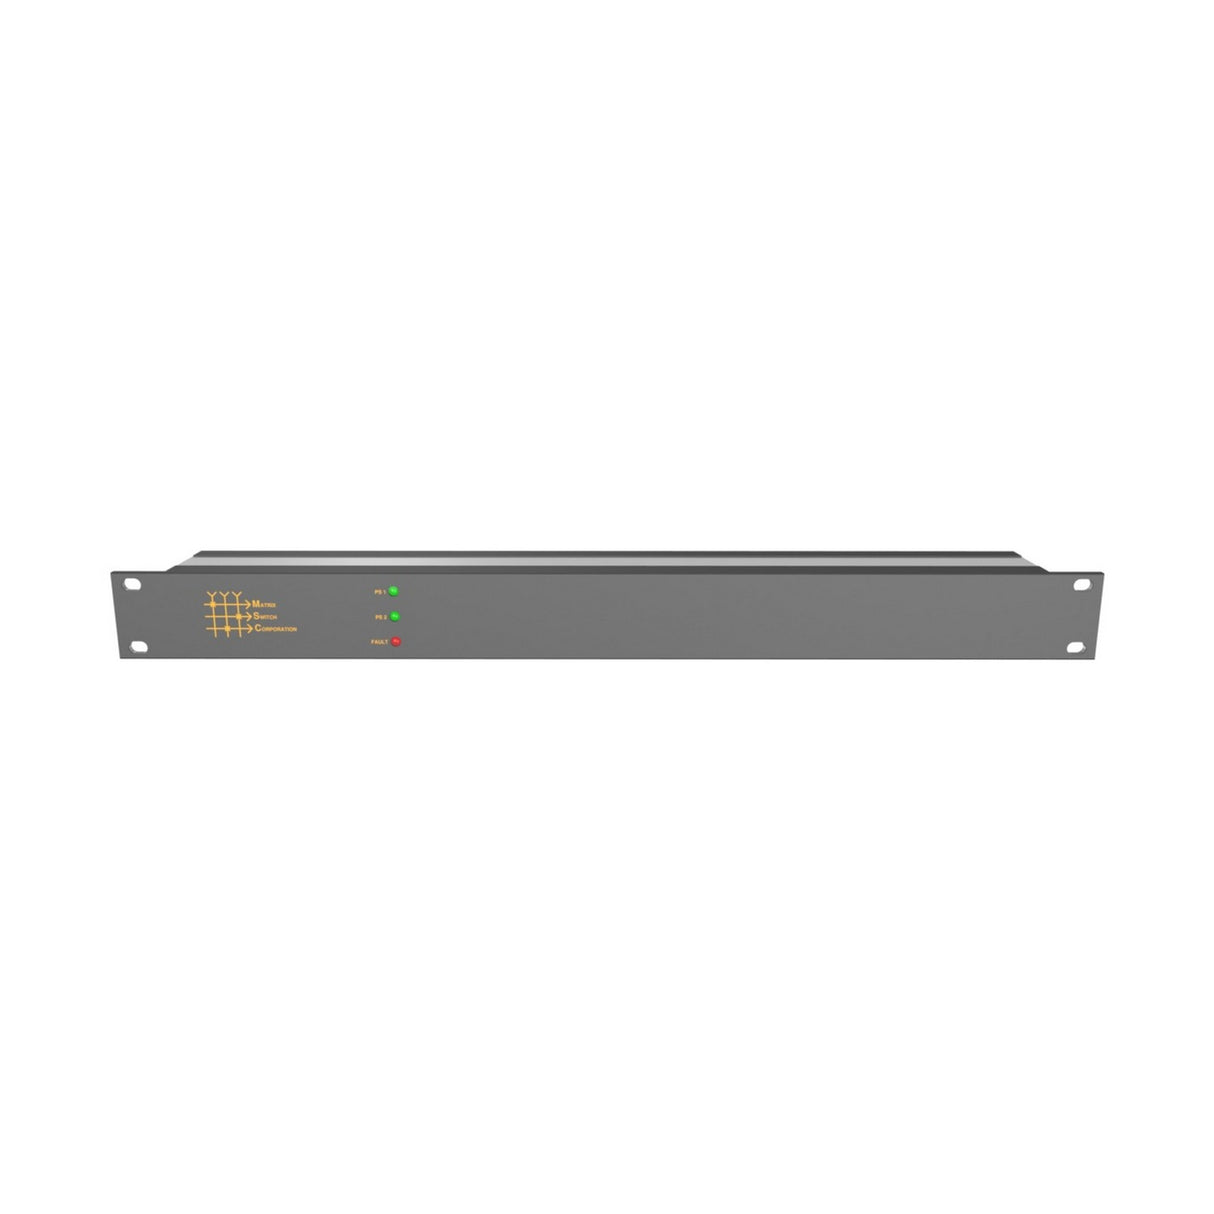 Matrix Switch MSC-XD44S 4 Input/4 Output 3G-SDI Video Router with Status Panel